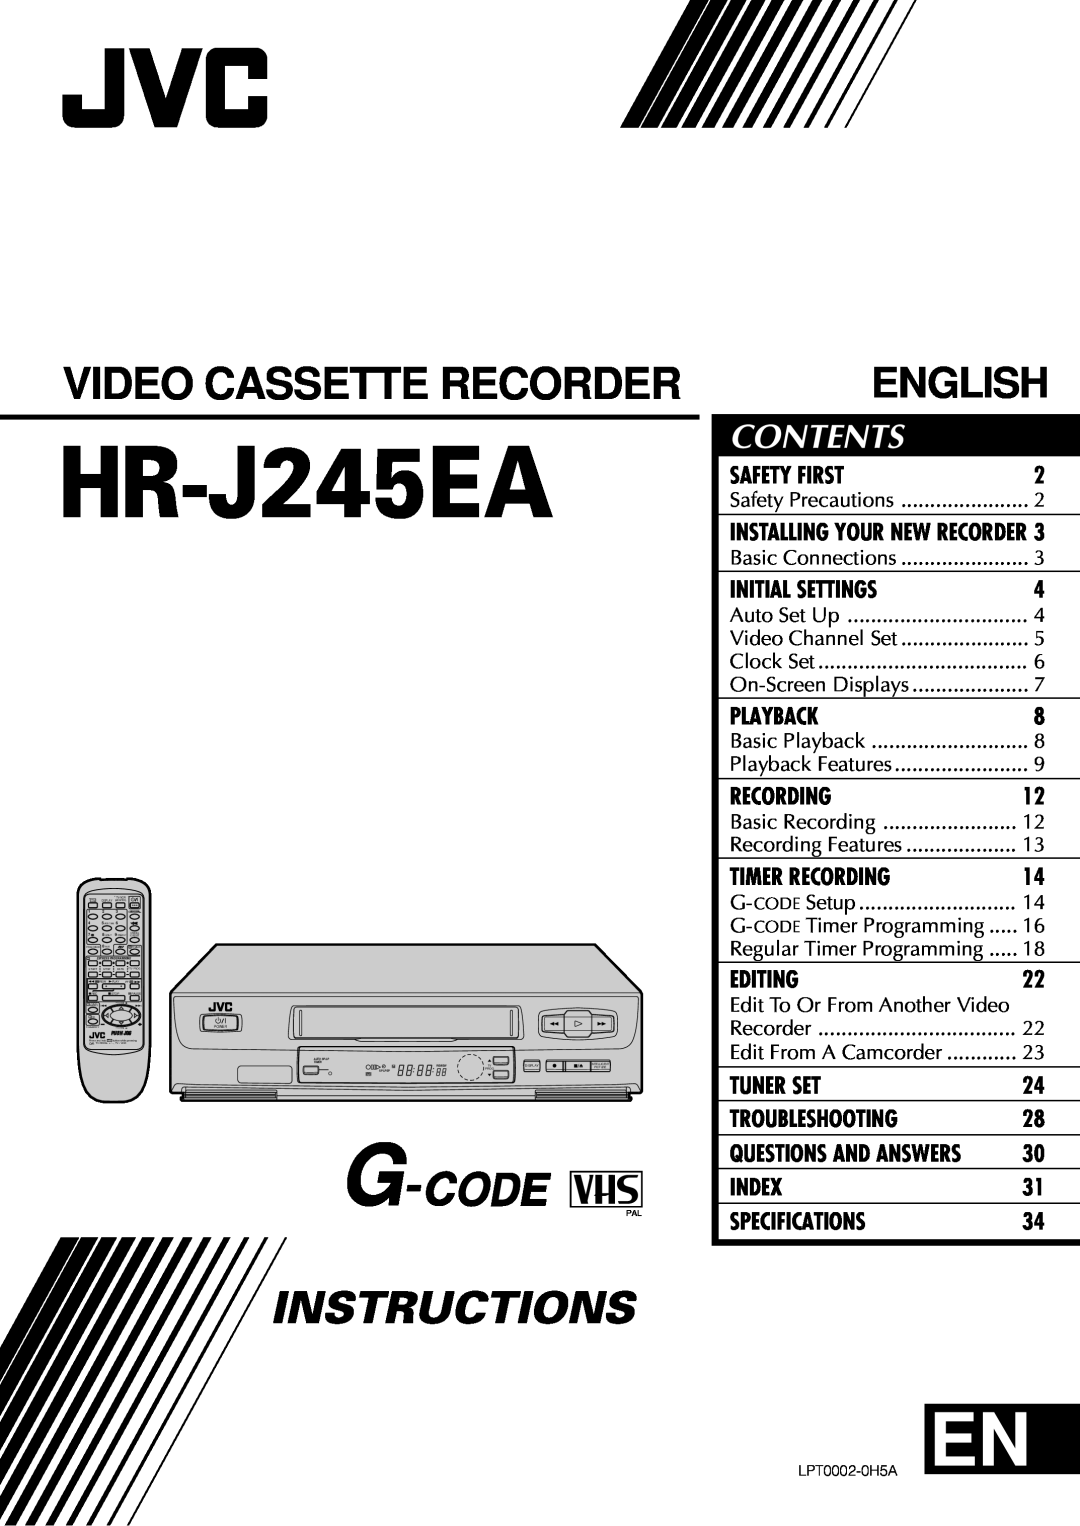 JVC HR-J245EA specifications Video Cassette Recorder, Instructions, English, Contents 